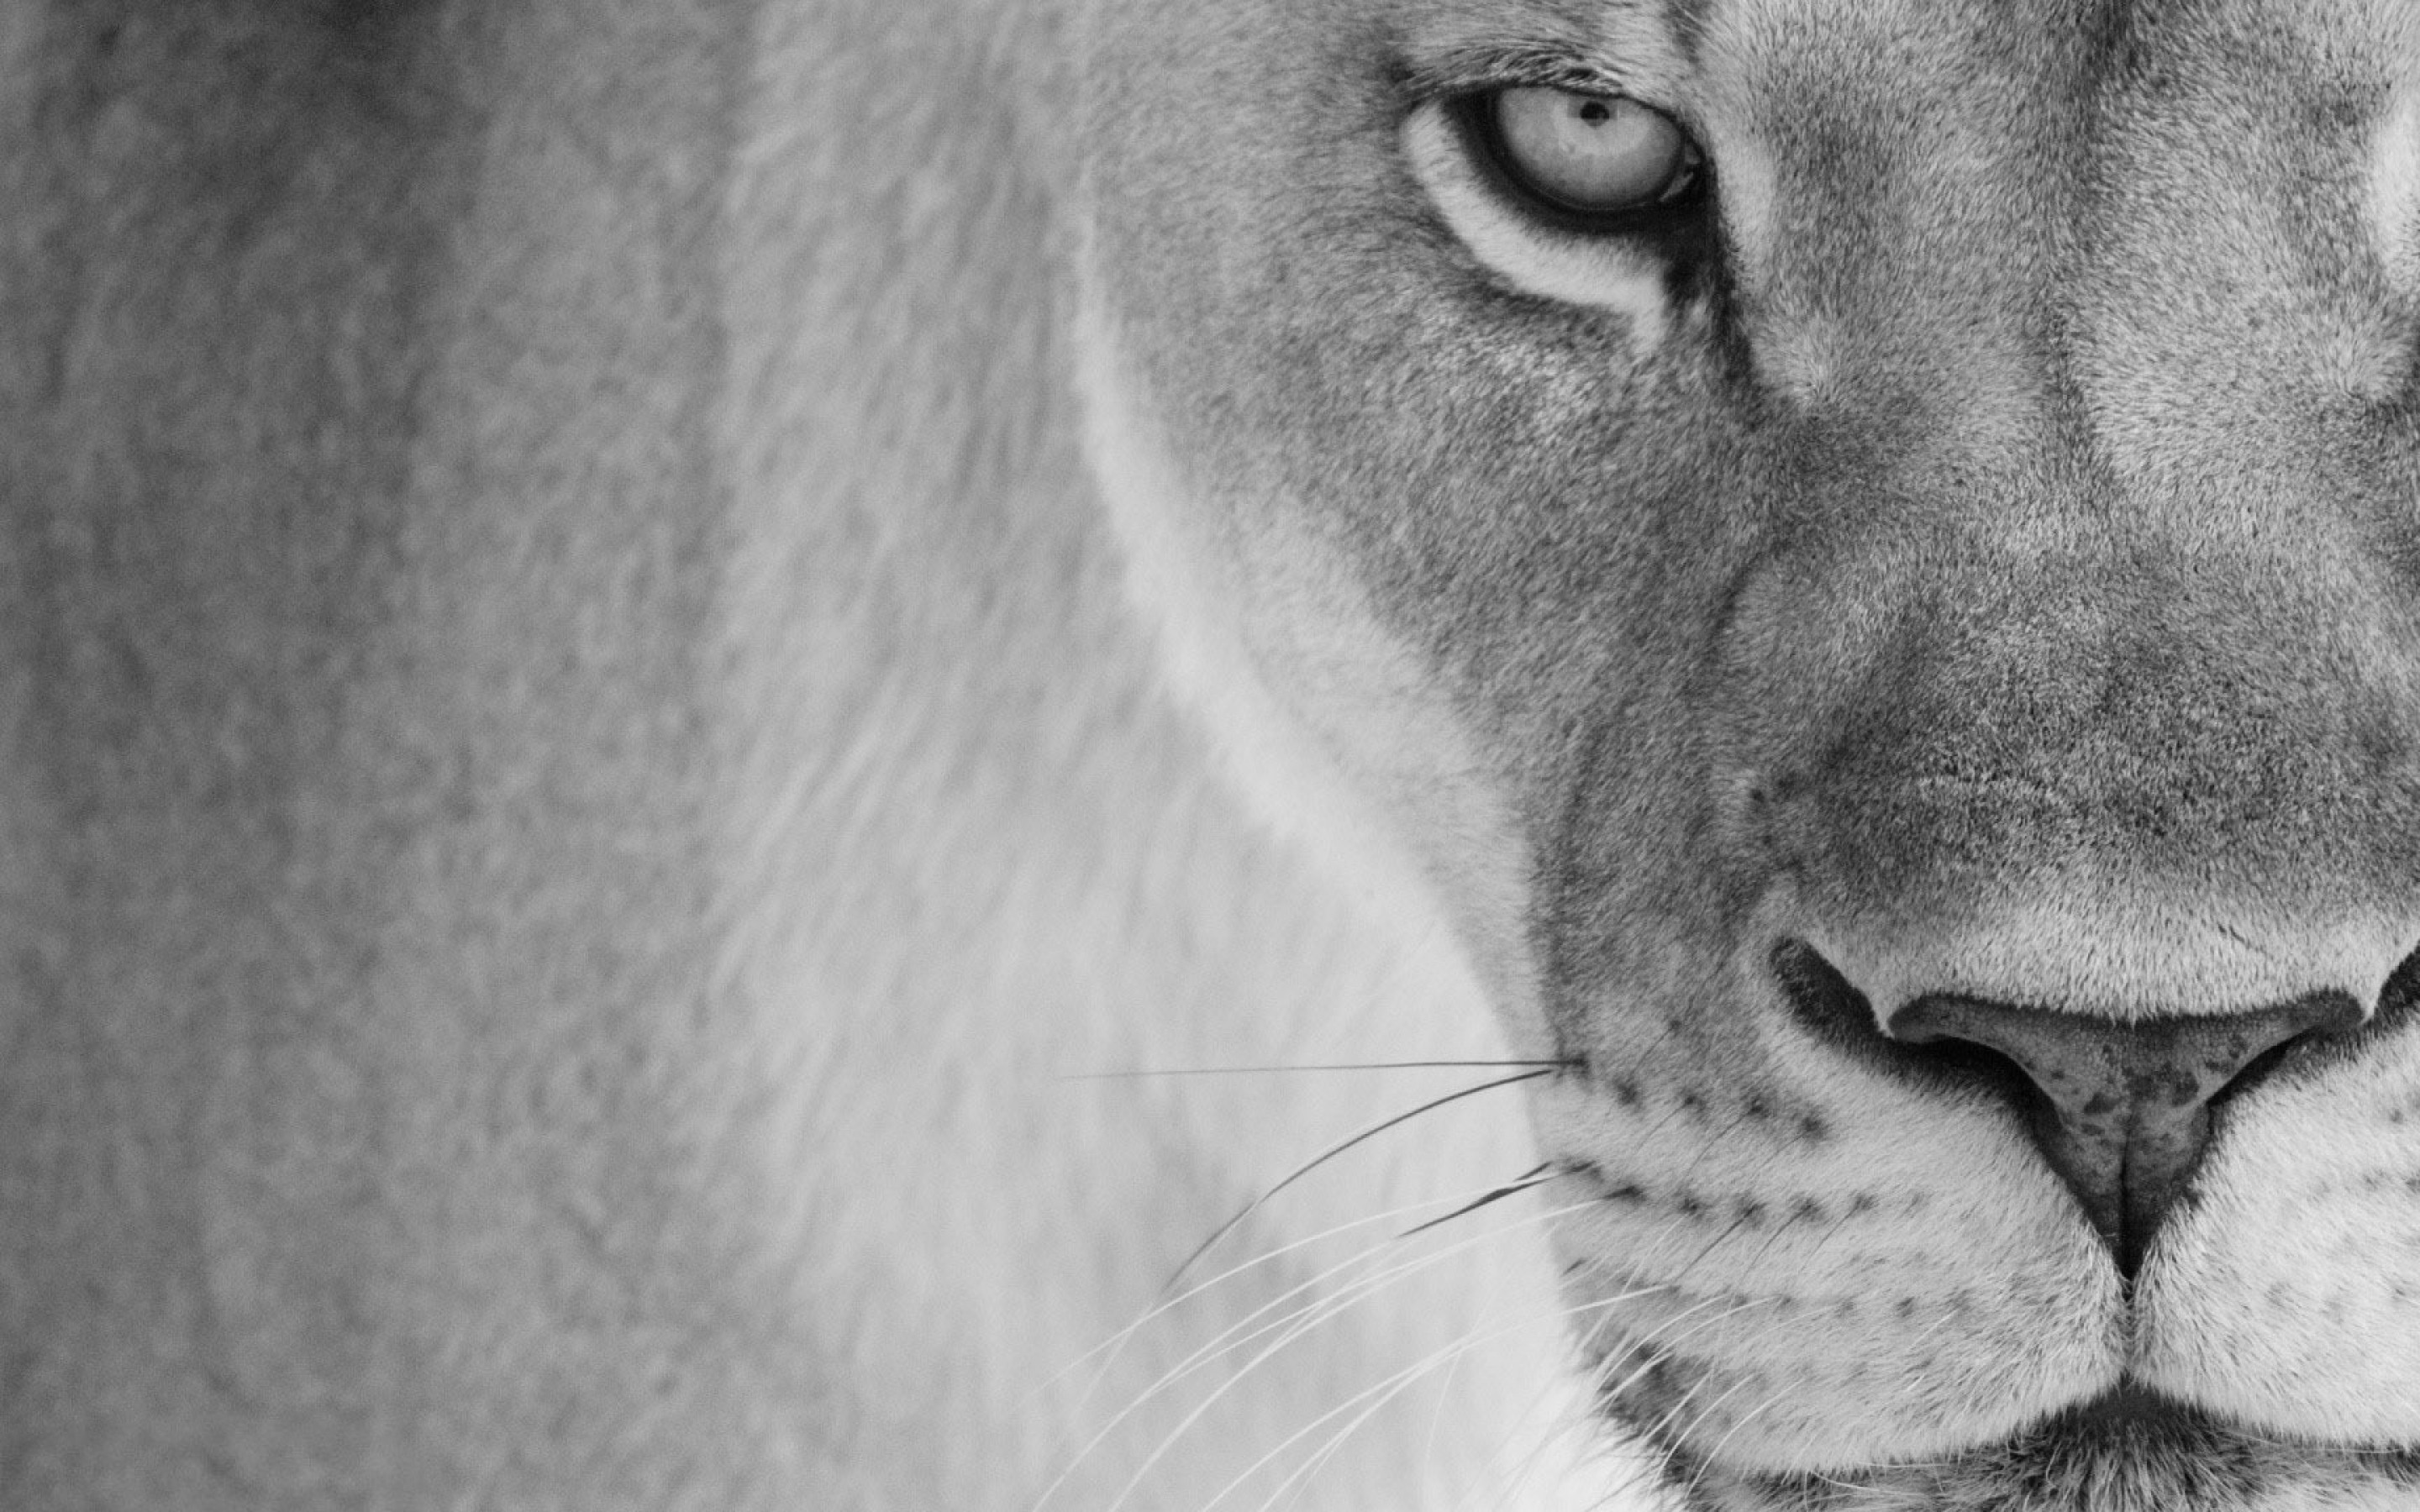 Download wallpaper for 1366x768 resolution | Lion close-up | animals |  Wallpaper Better